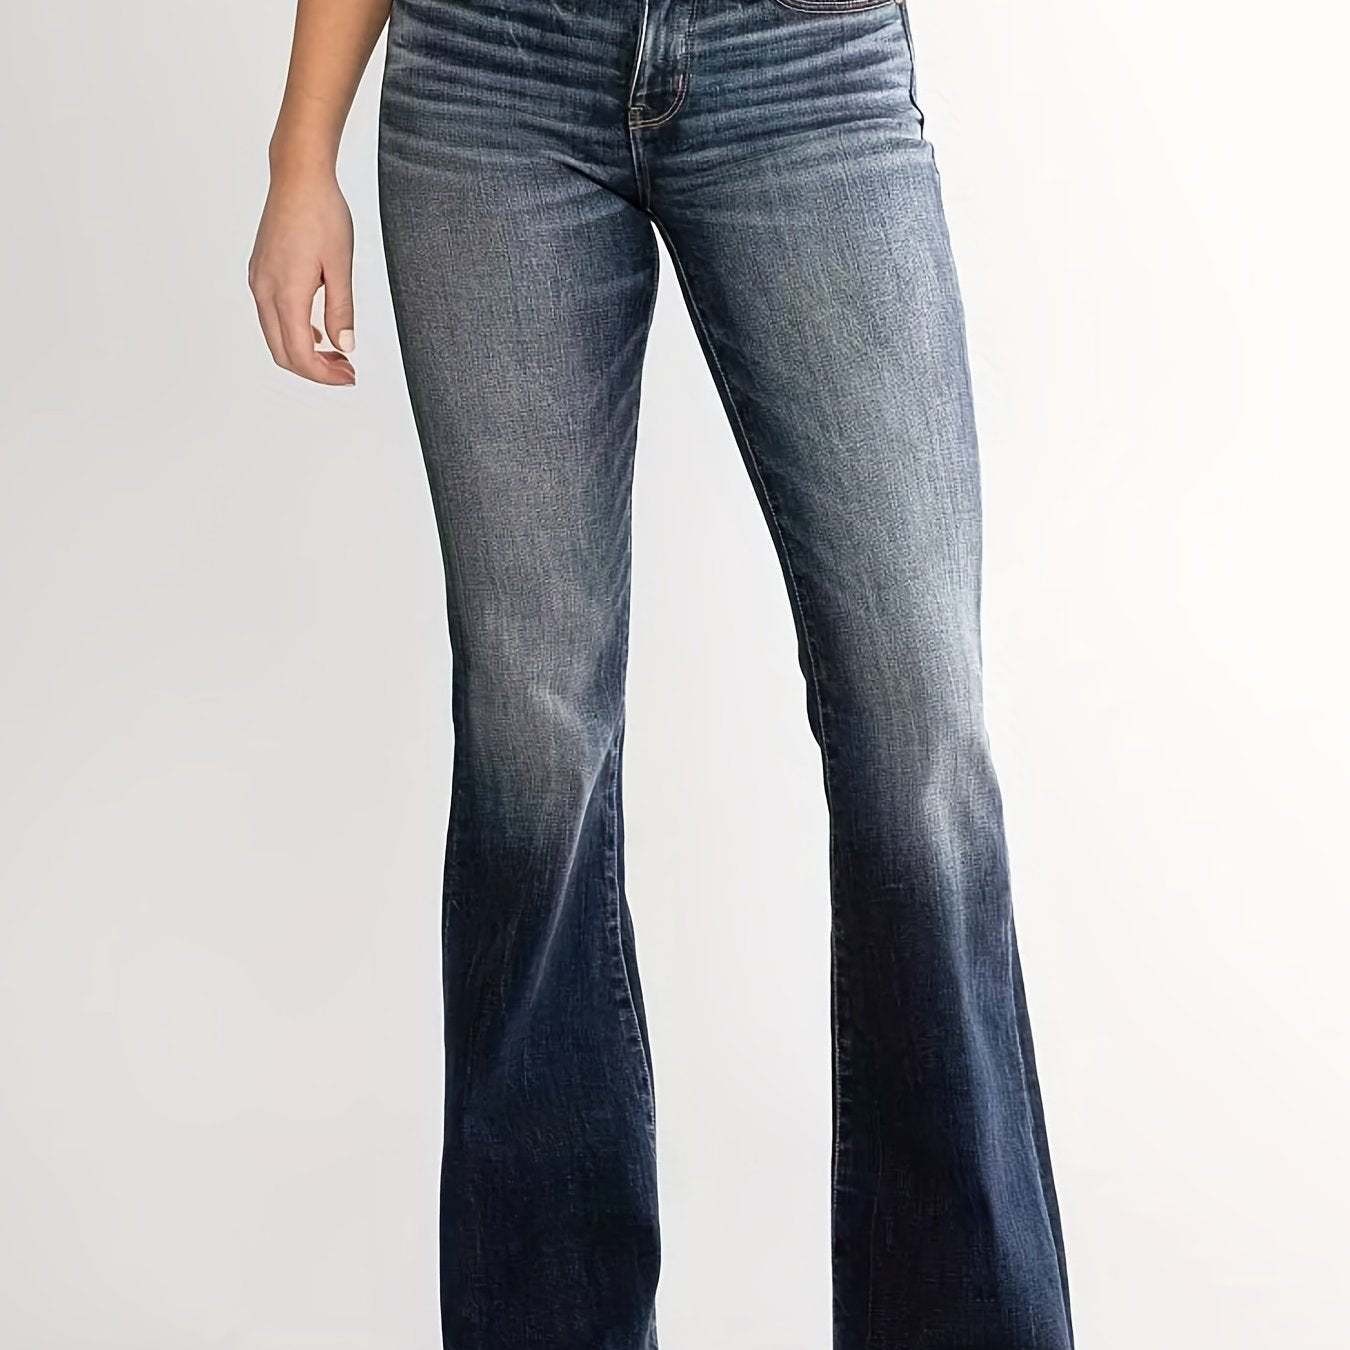 Antmvs Double Button Whiskering Flare Leg Jeans, Mid Waist Retro Faded Watter Tipple Embossed Denim Pants, Women's Denim Jeans & Clothing